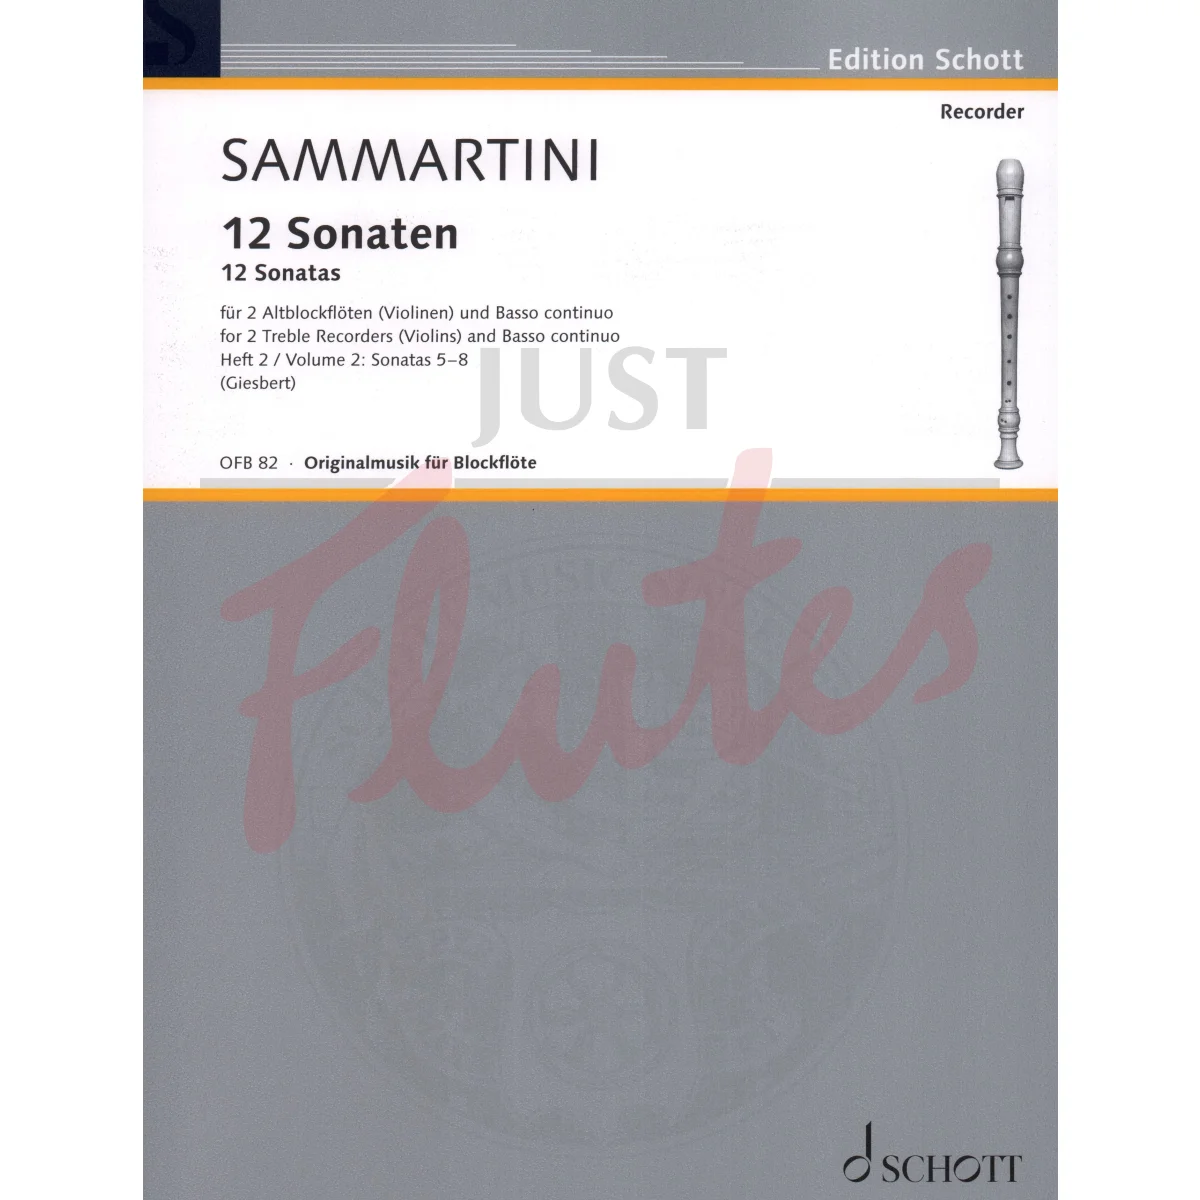 12 Sonatas Book 2 for treble recorders or violins and basso continuo